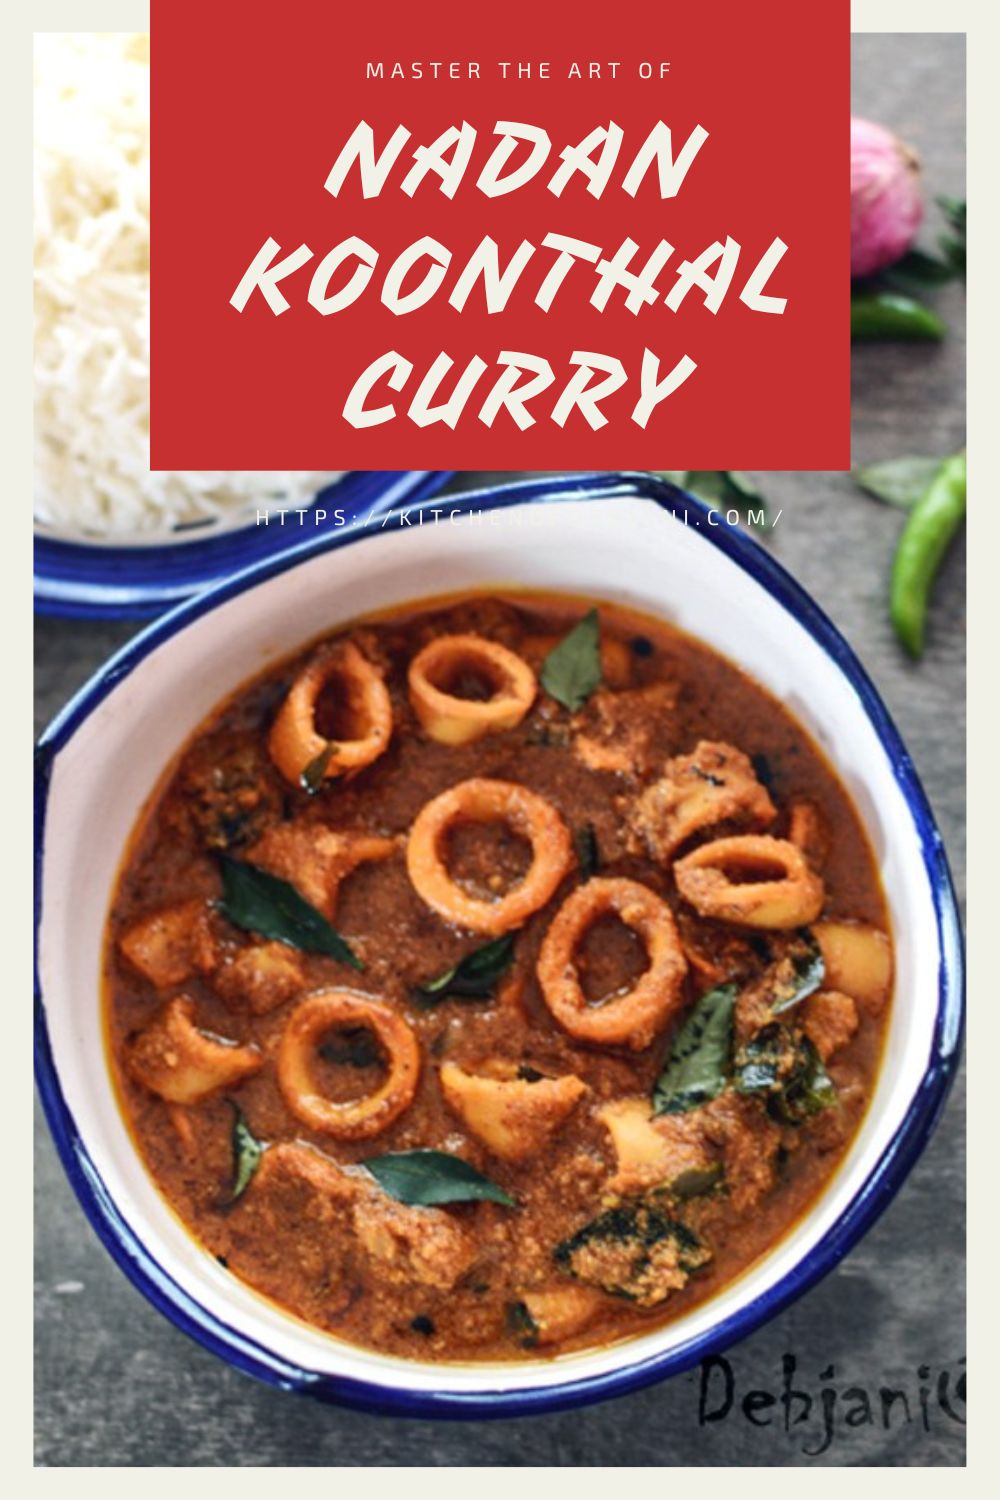 %Nadan Koonthal Curry Photo Food Pinterest Pin